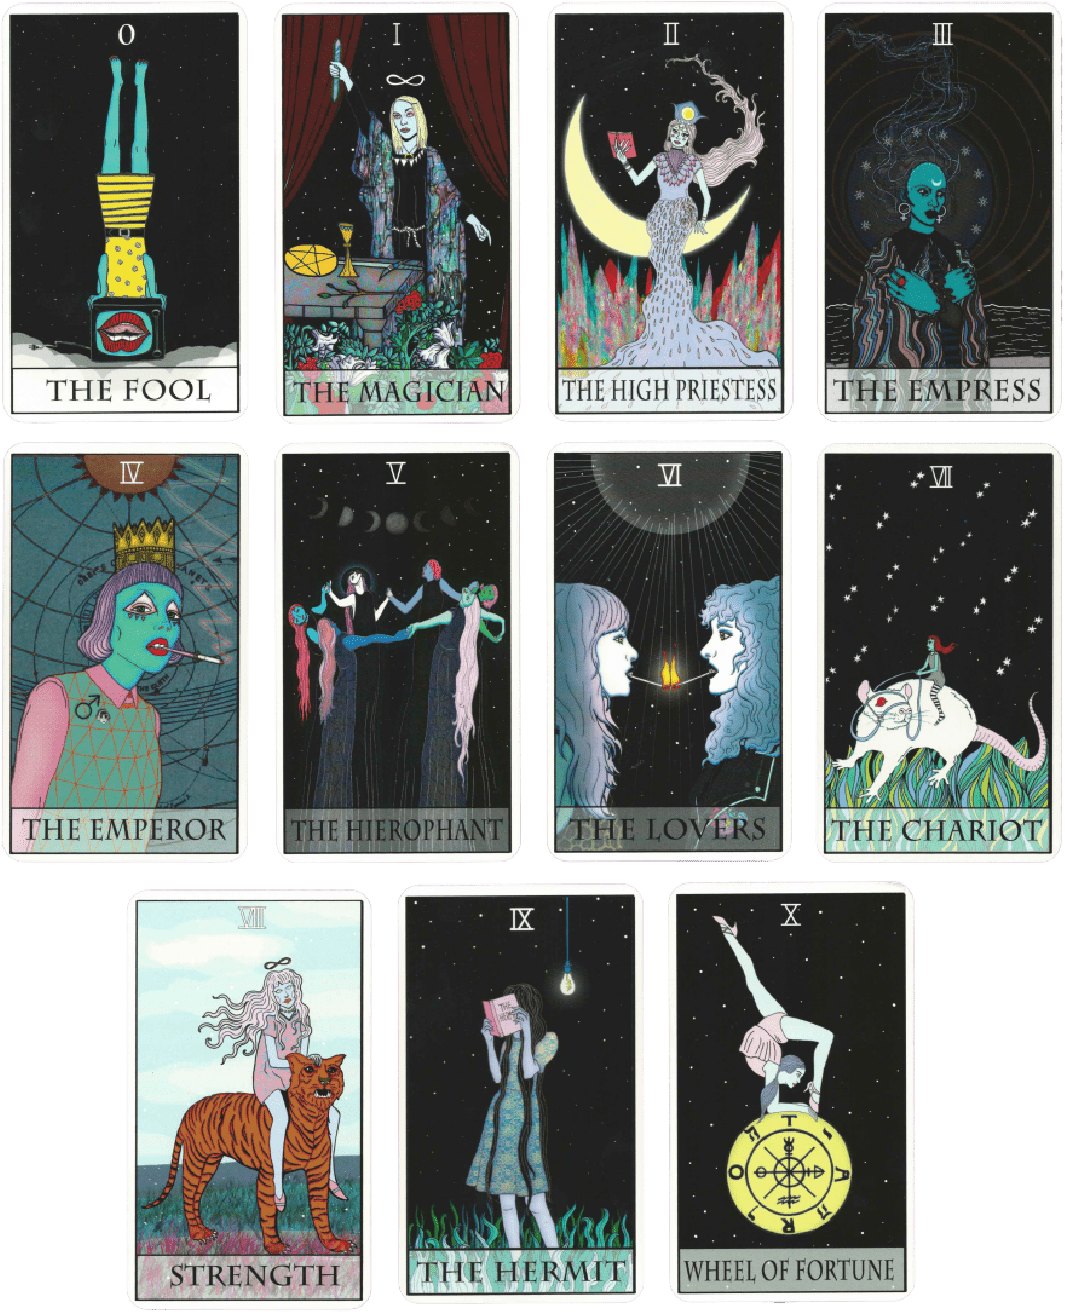 moon power tarot 2.0 deck major arcana cards by Charlie Quintero and Camille Smooch (Sick Sad Girls). Cards from zero to ten of major arcana of the moon power tarot deck